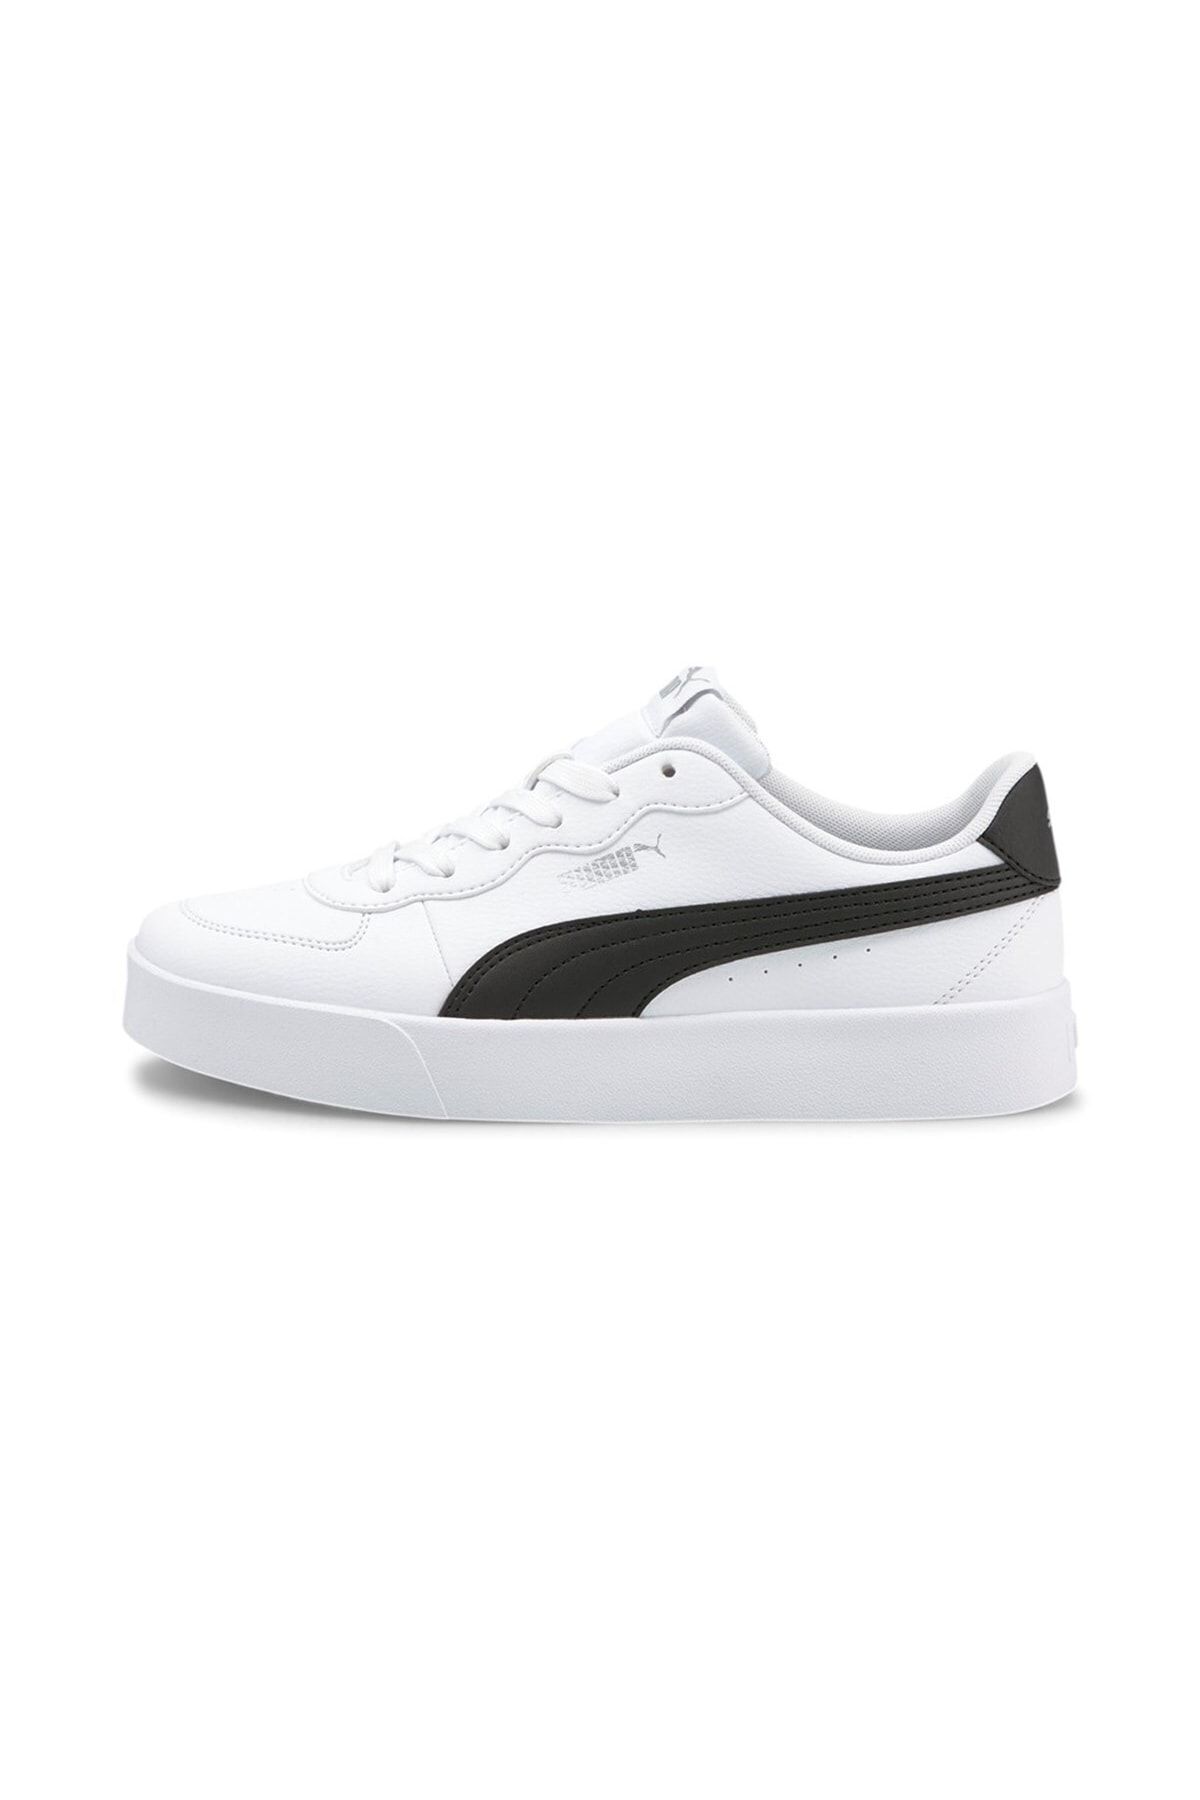 Puma Ayakkabı 38014704 Skye Clean White-black